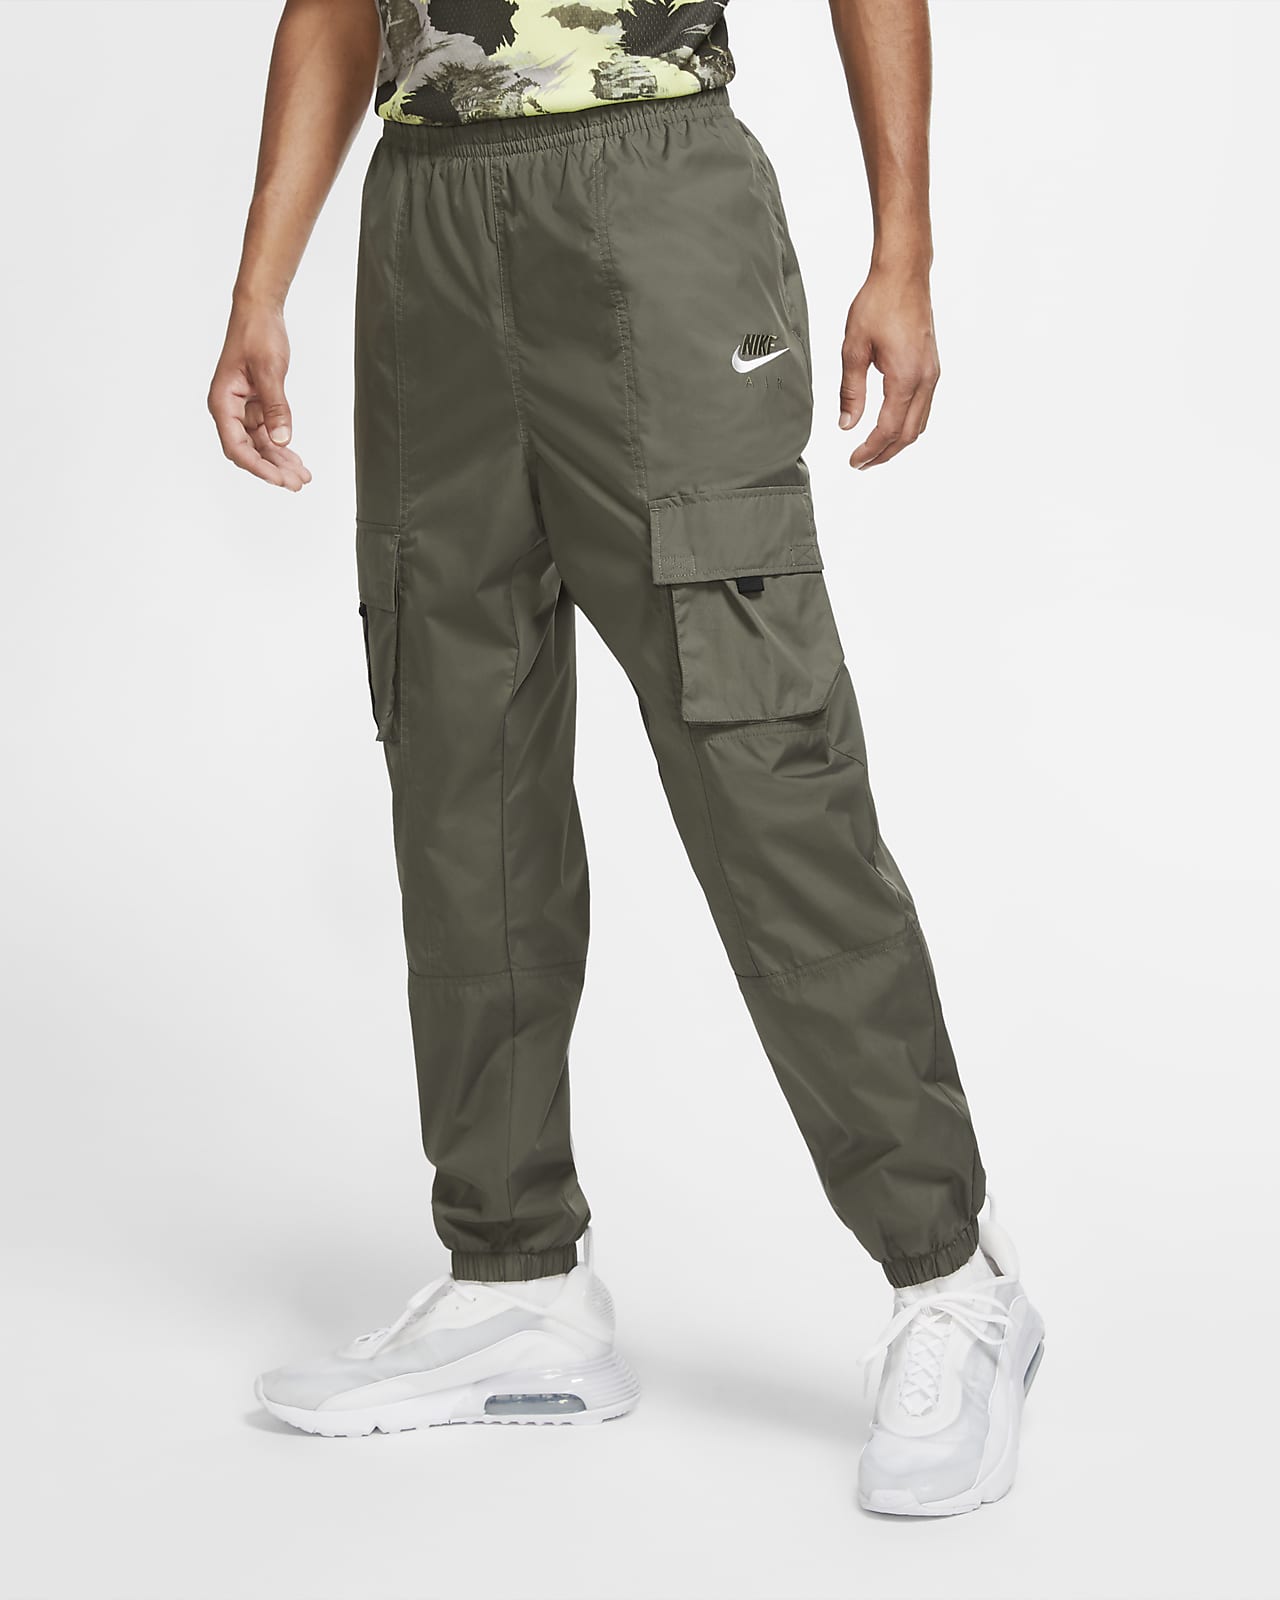 men's nike sportswear air max jogger pants